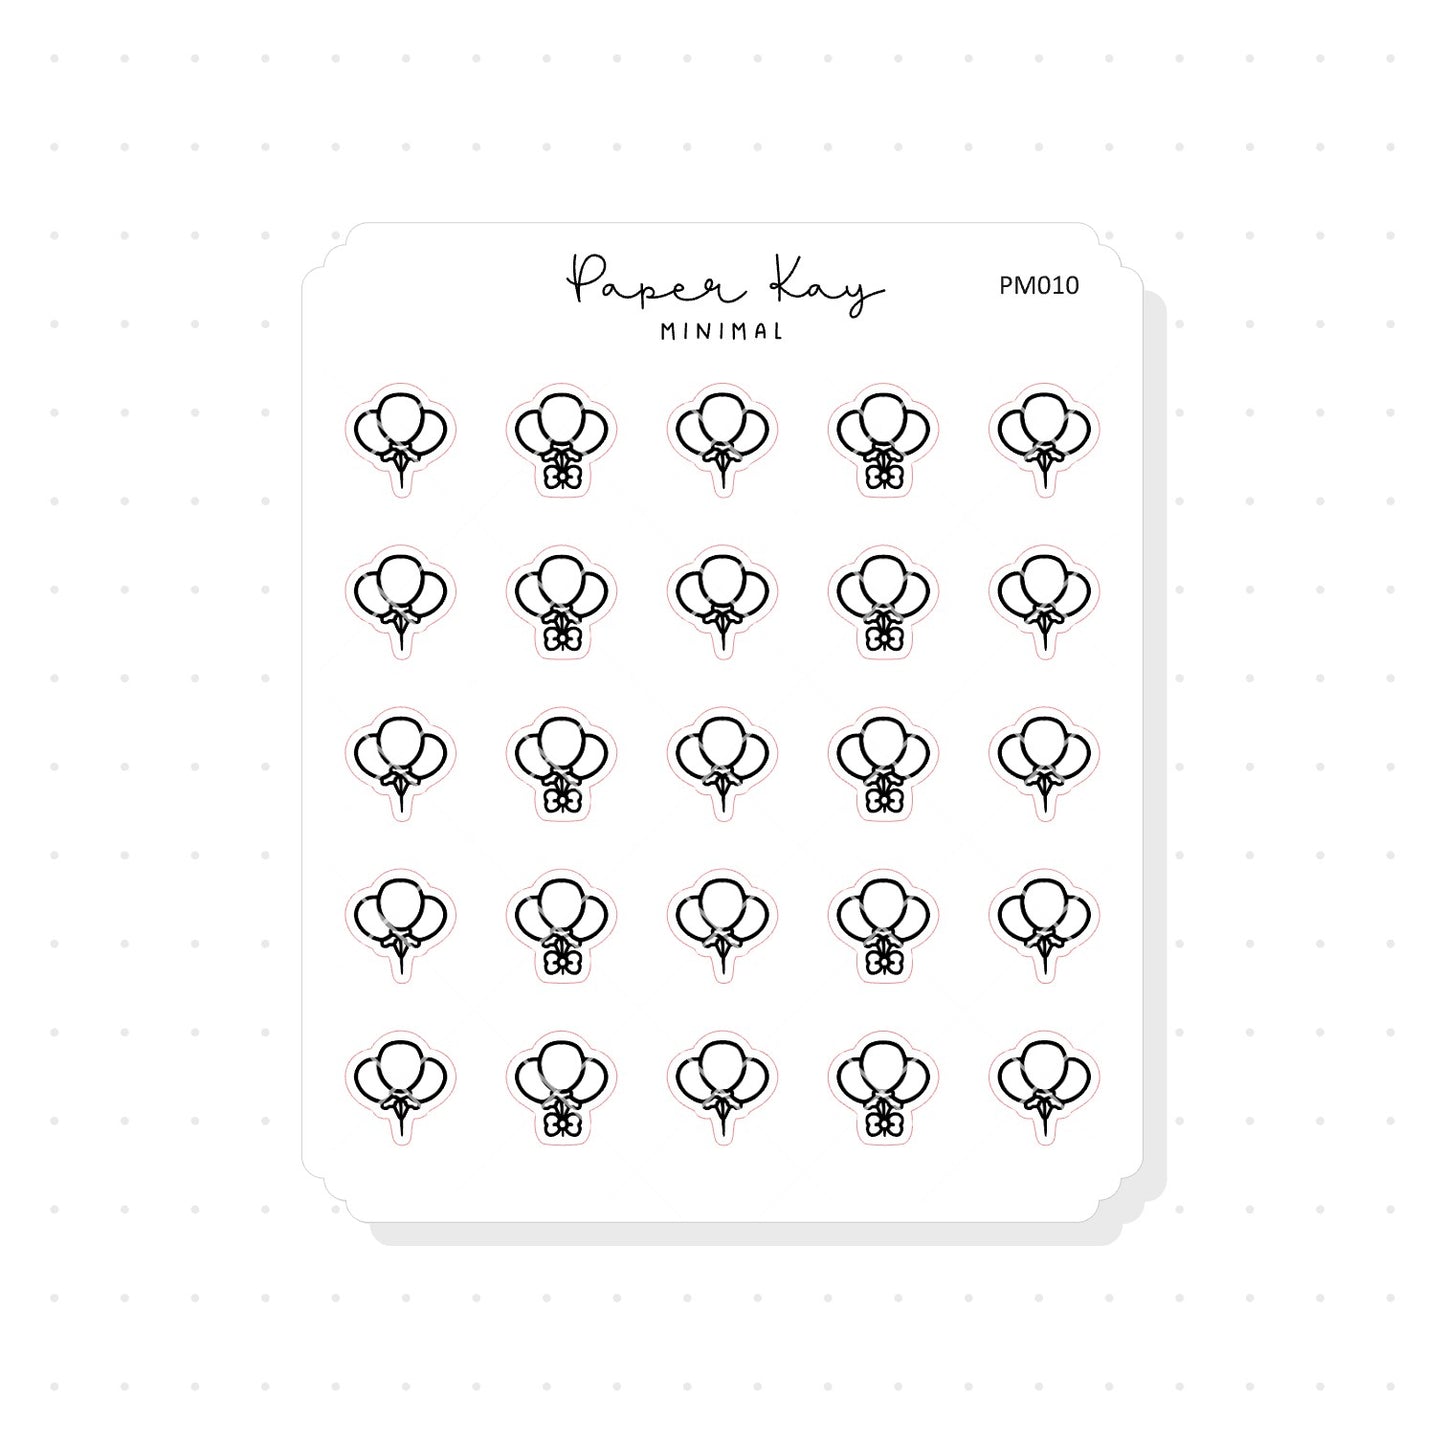 (PM010) Celebration Balloons - Tiny Minimal Icon Stickers